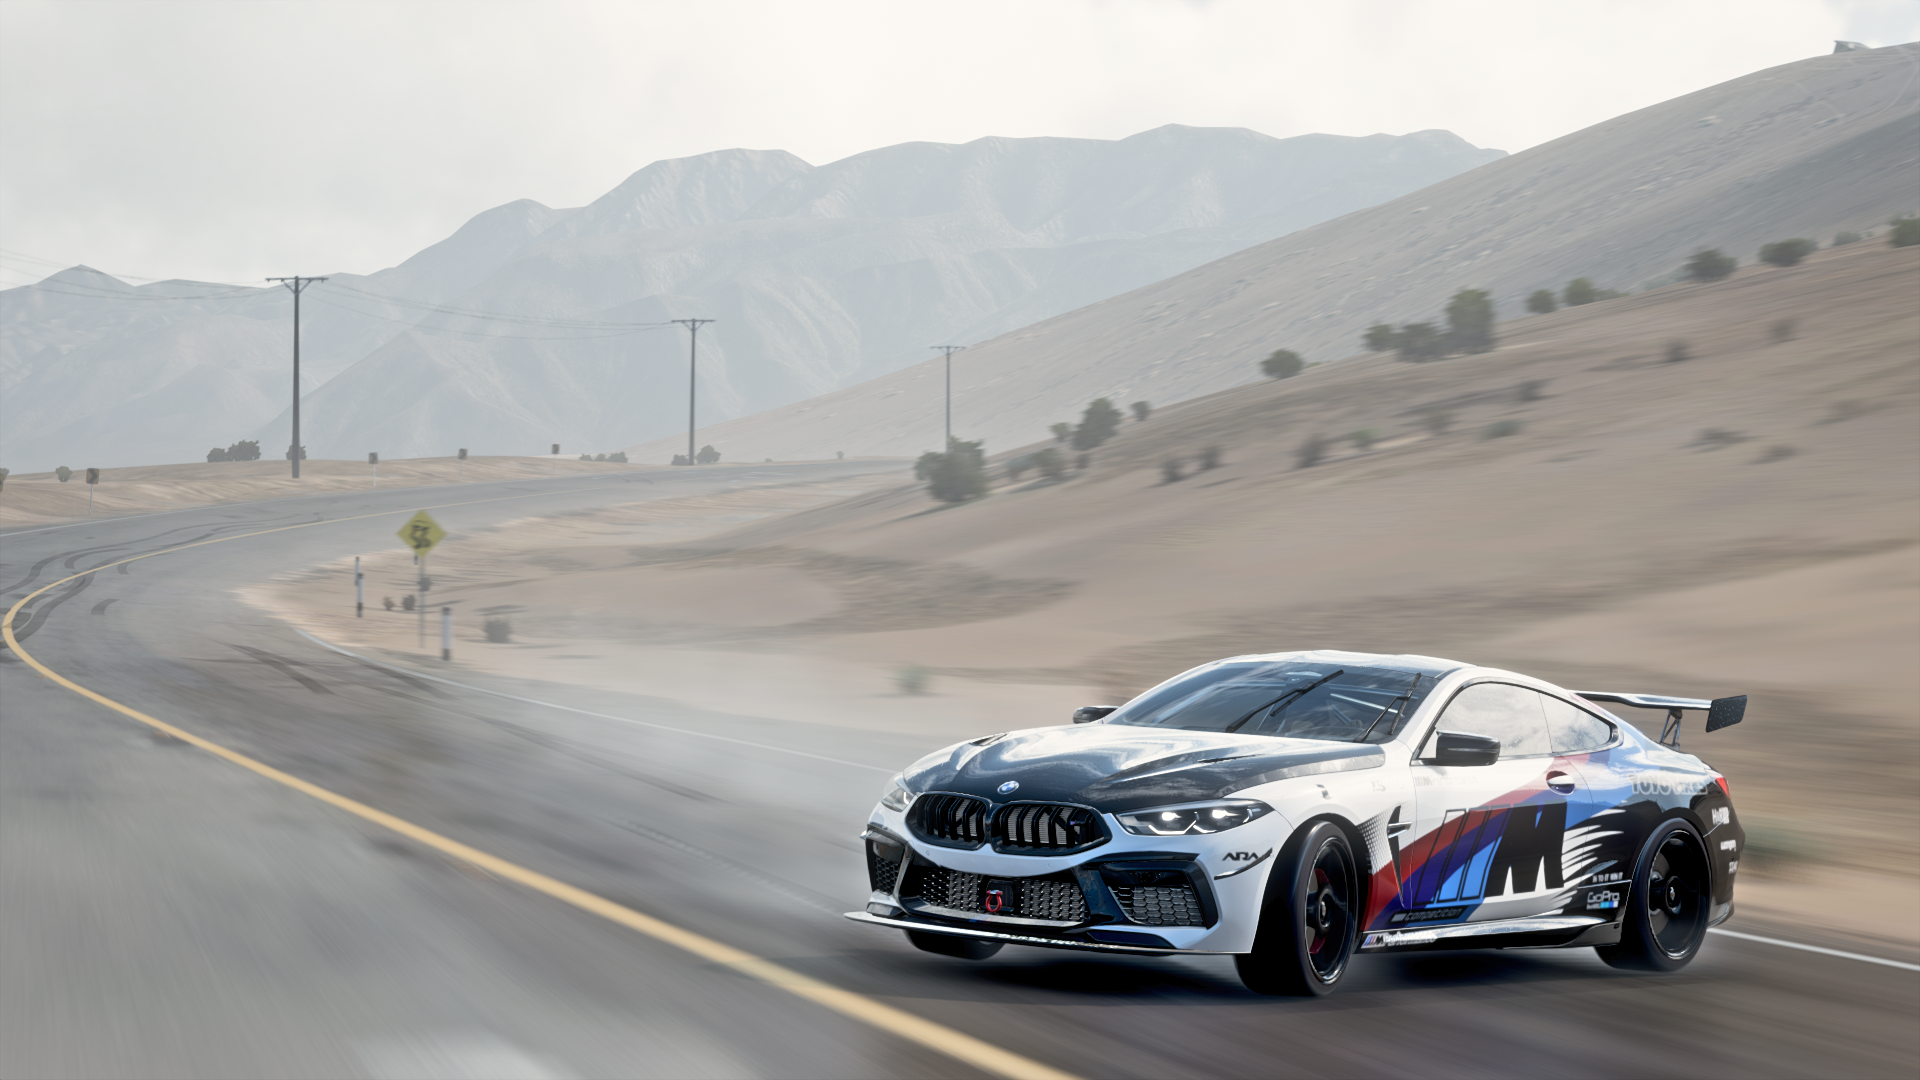 General 1920x1080 Forza Forza Horizon Forza Horizon 5 BMW BMW 8 series car video games road headlights